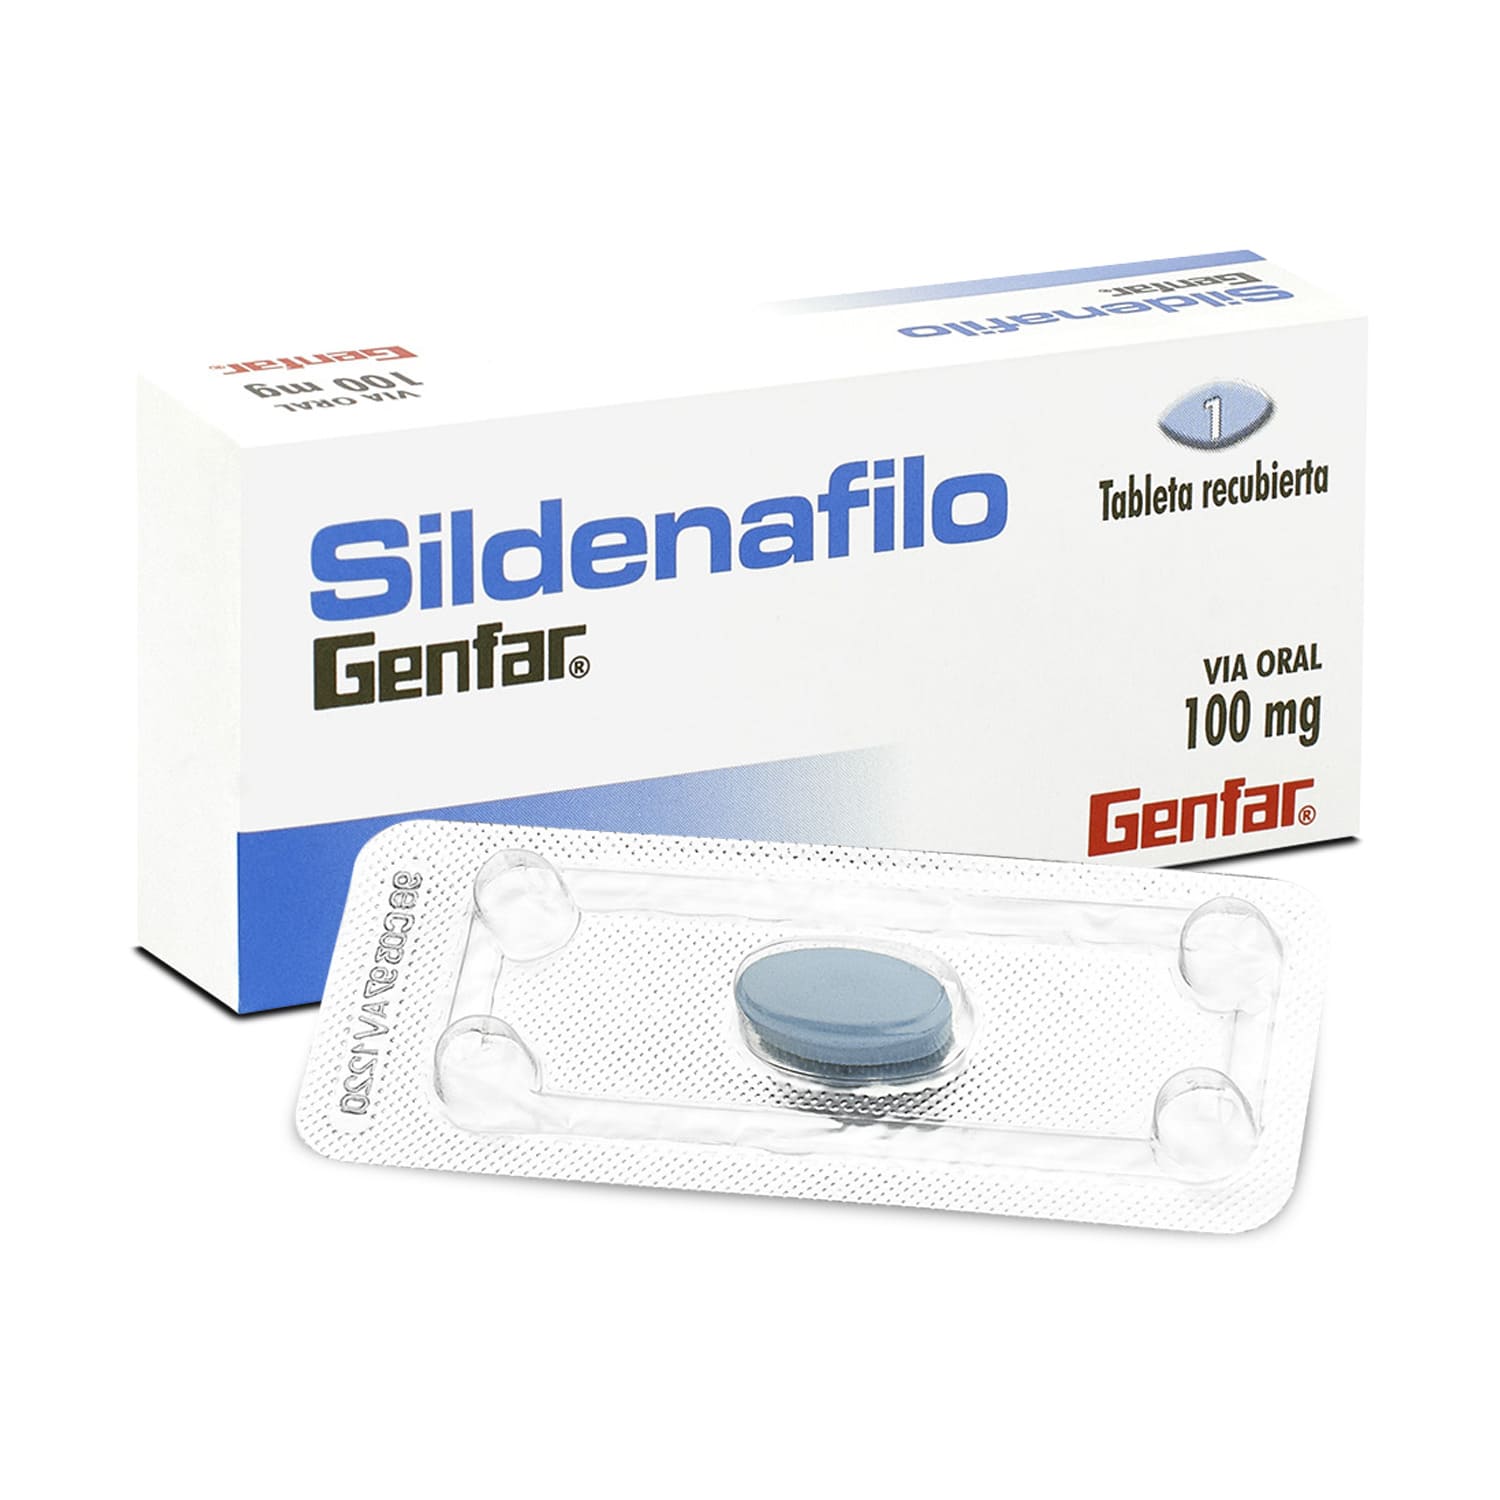 FARMACIA UNIVERSAL - Sildenafilo 100 mg x 1 Tableta